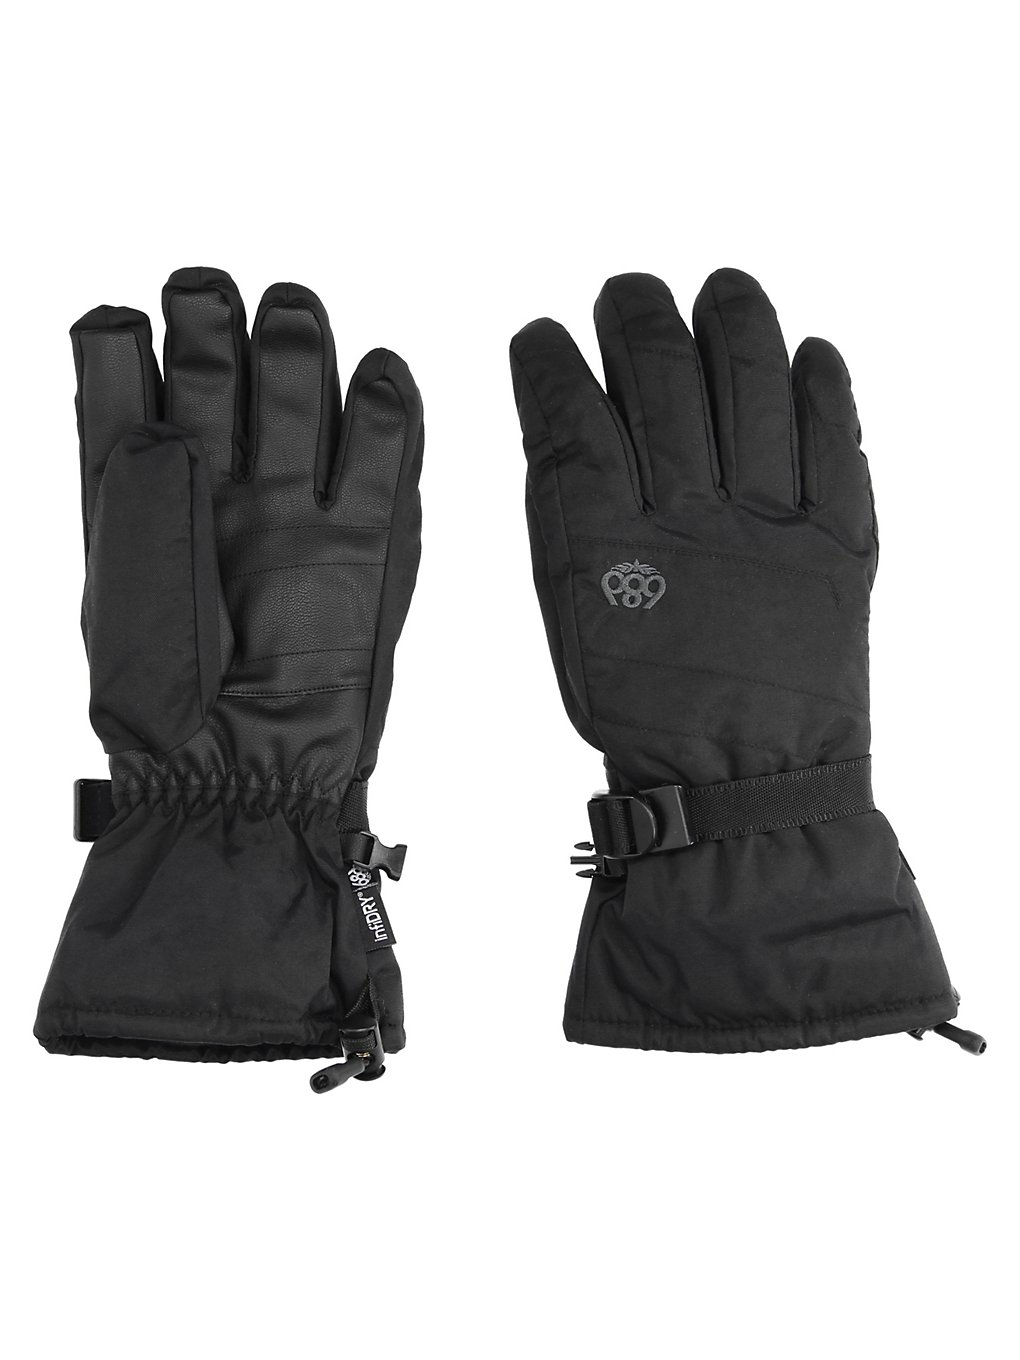 686 Infinity Gauntlet Gloves black